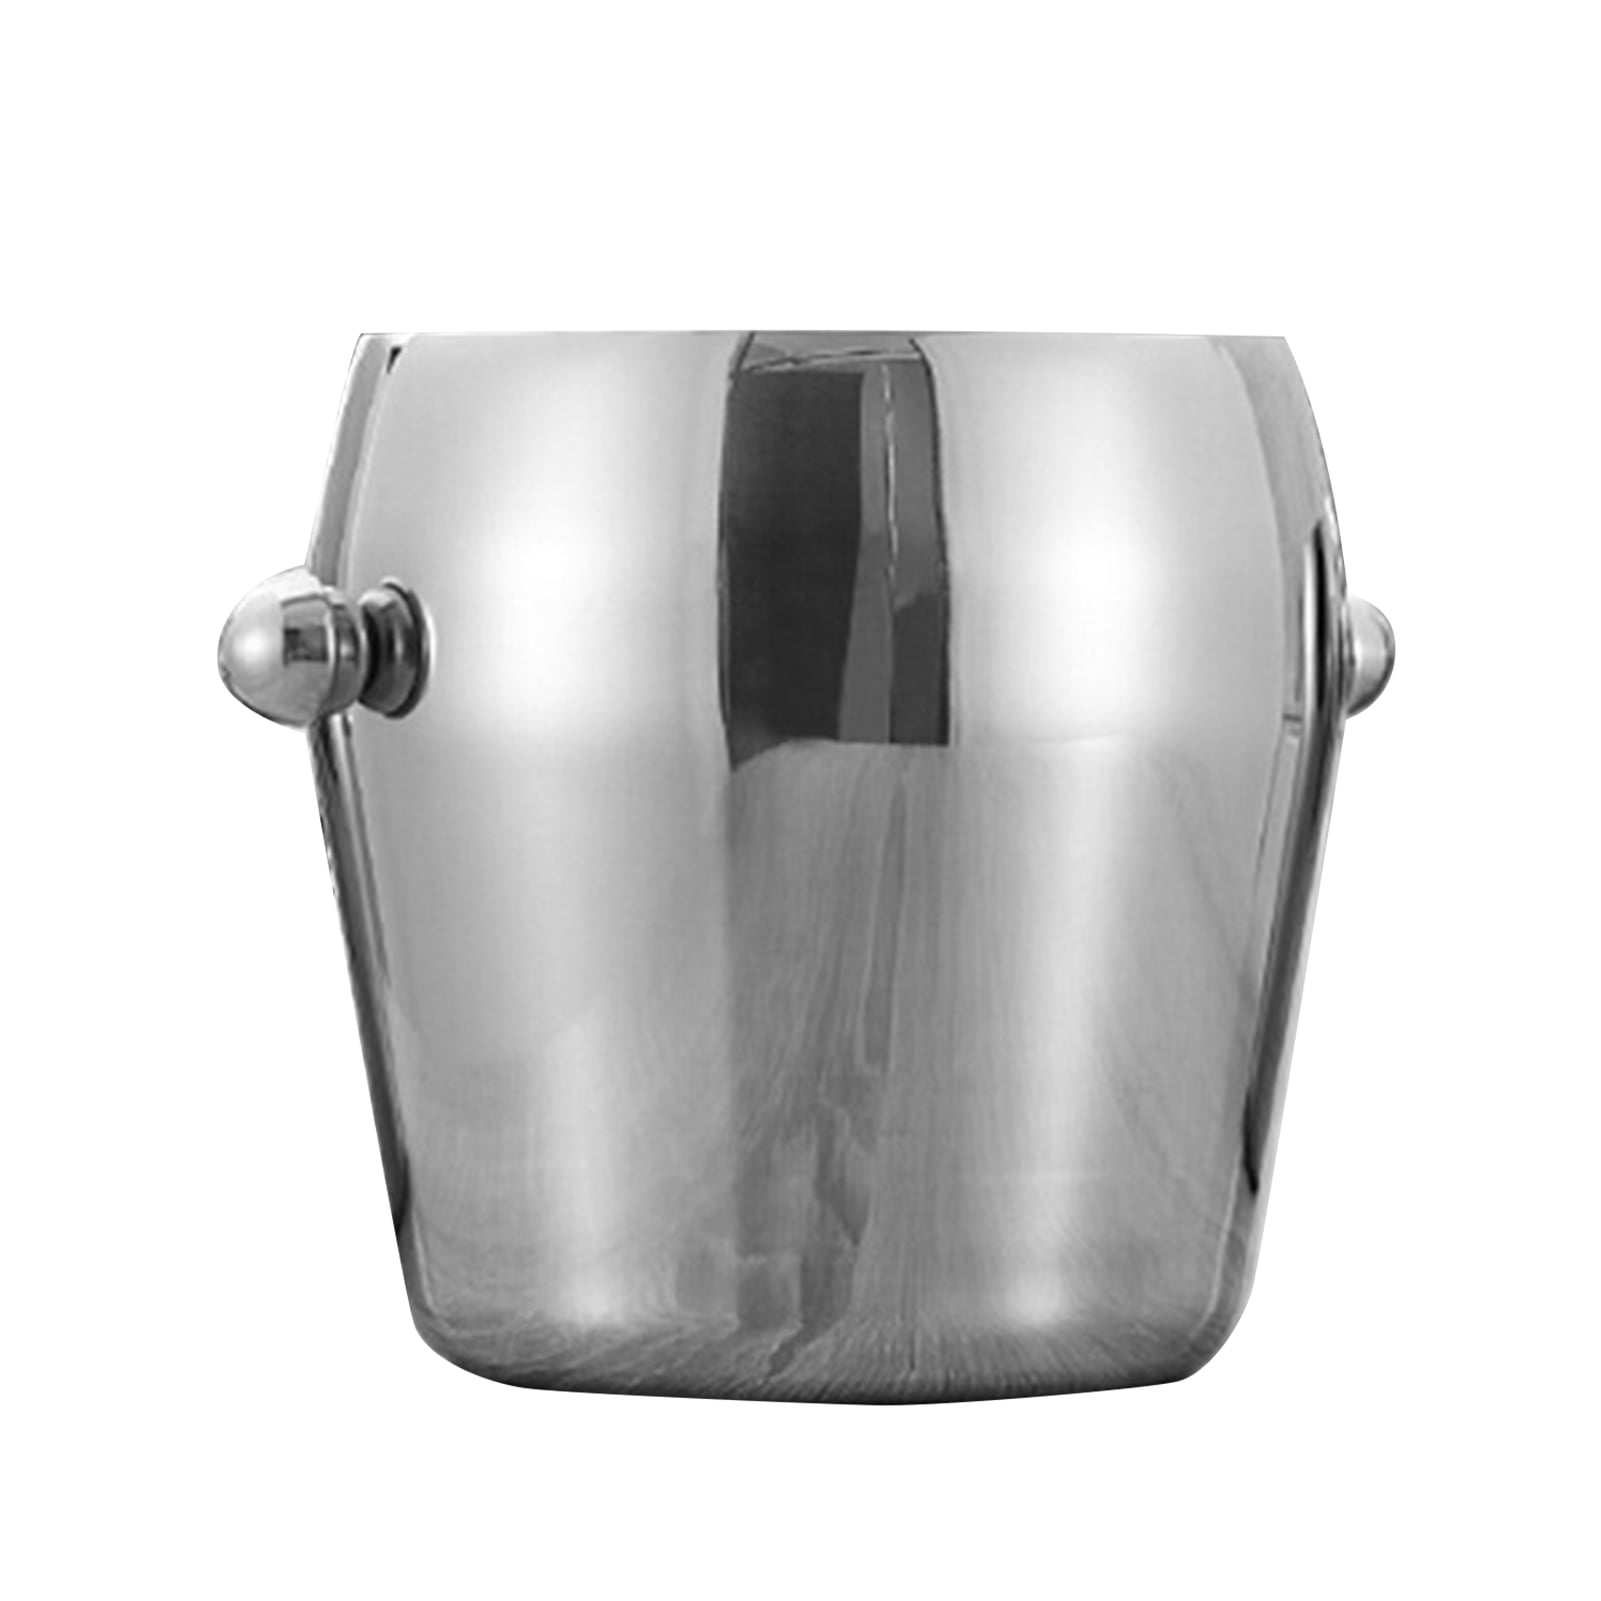 1 wine whiskey ice pillar bucket cooler chiller stainless steel waist home bar 